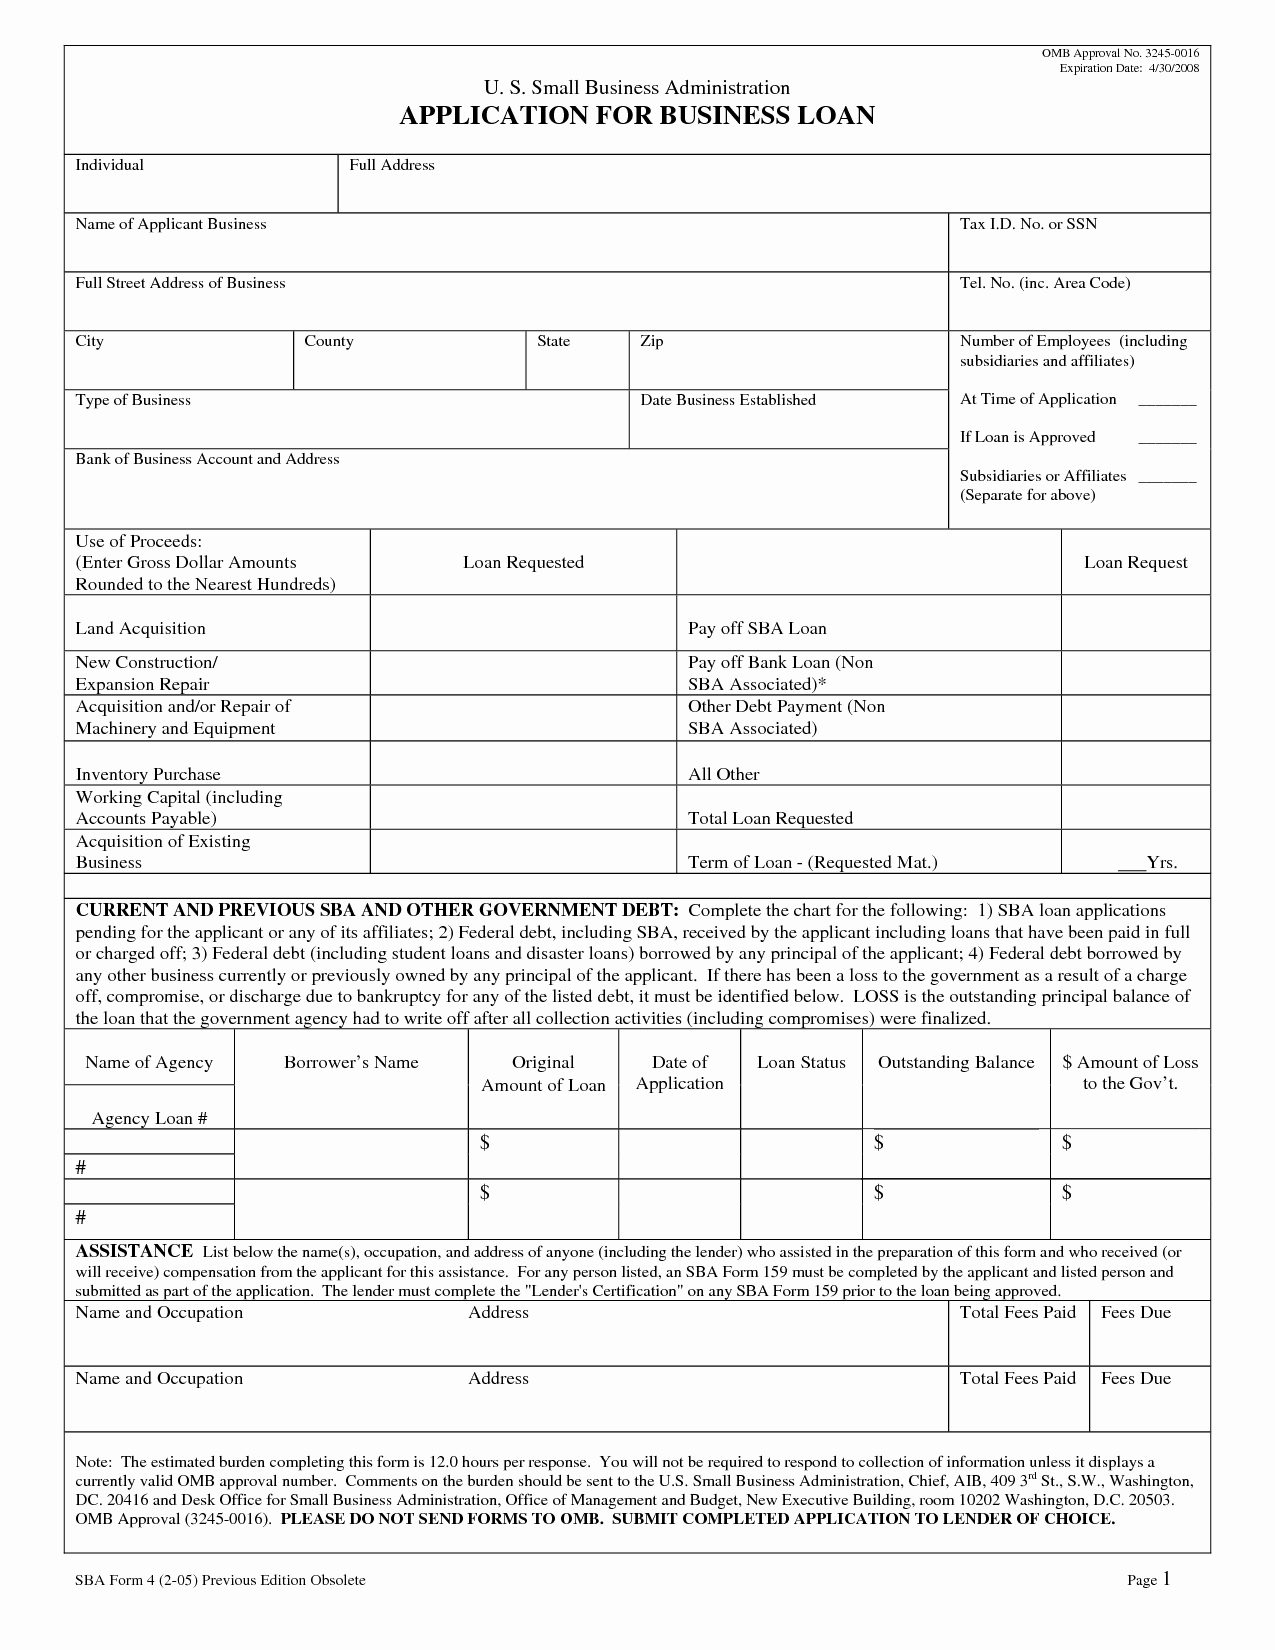 Car Loan Application form Template Fresh Business Loan Application form Free Printable Documents